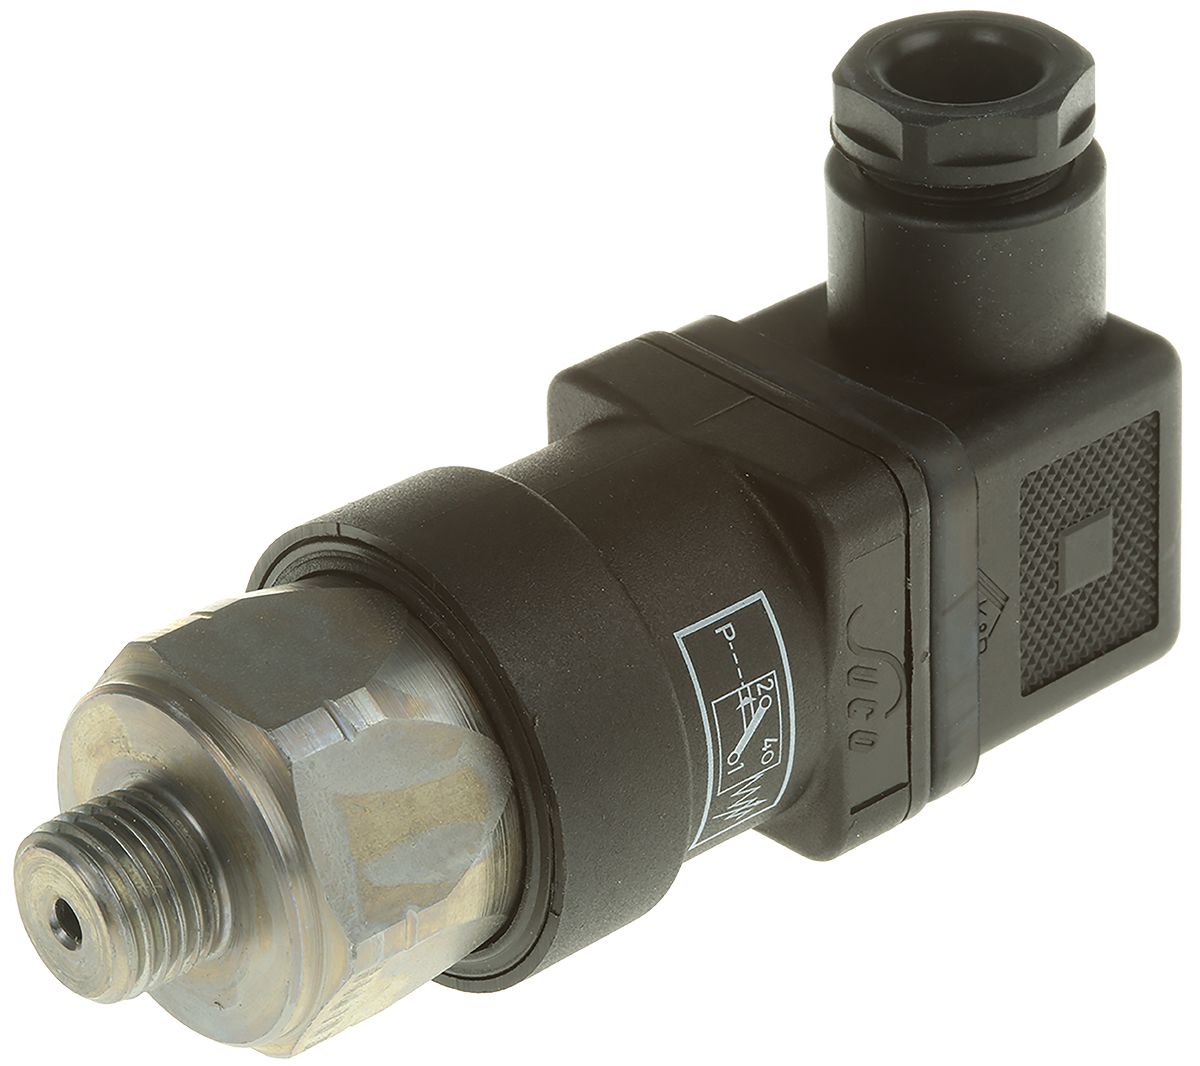 Suco 0184 Series Pressure Sensor, 10bar Min, 100bar Max, Relay Output